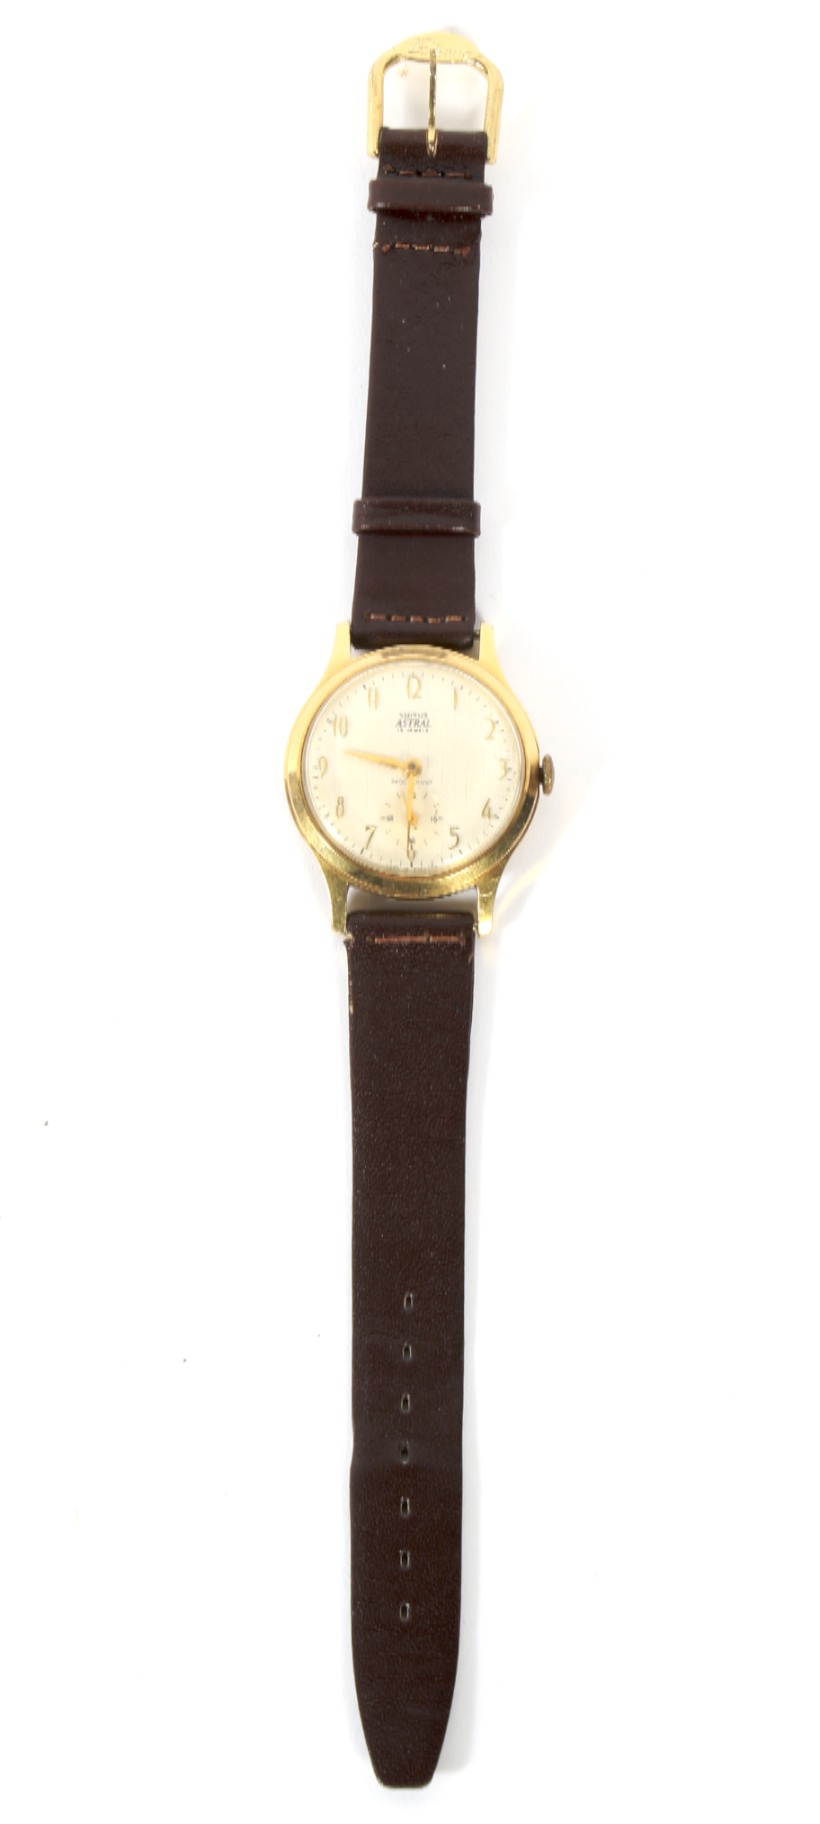 A vintage Smiths Astral gentleman's manual wind wristwatch.